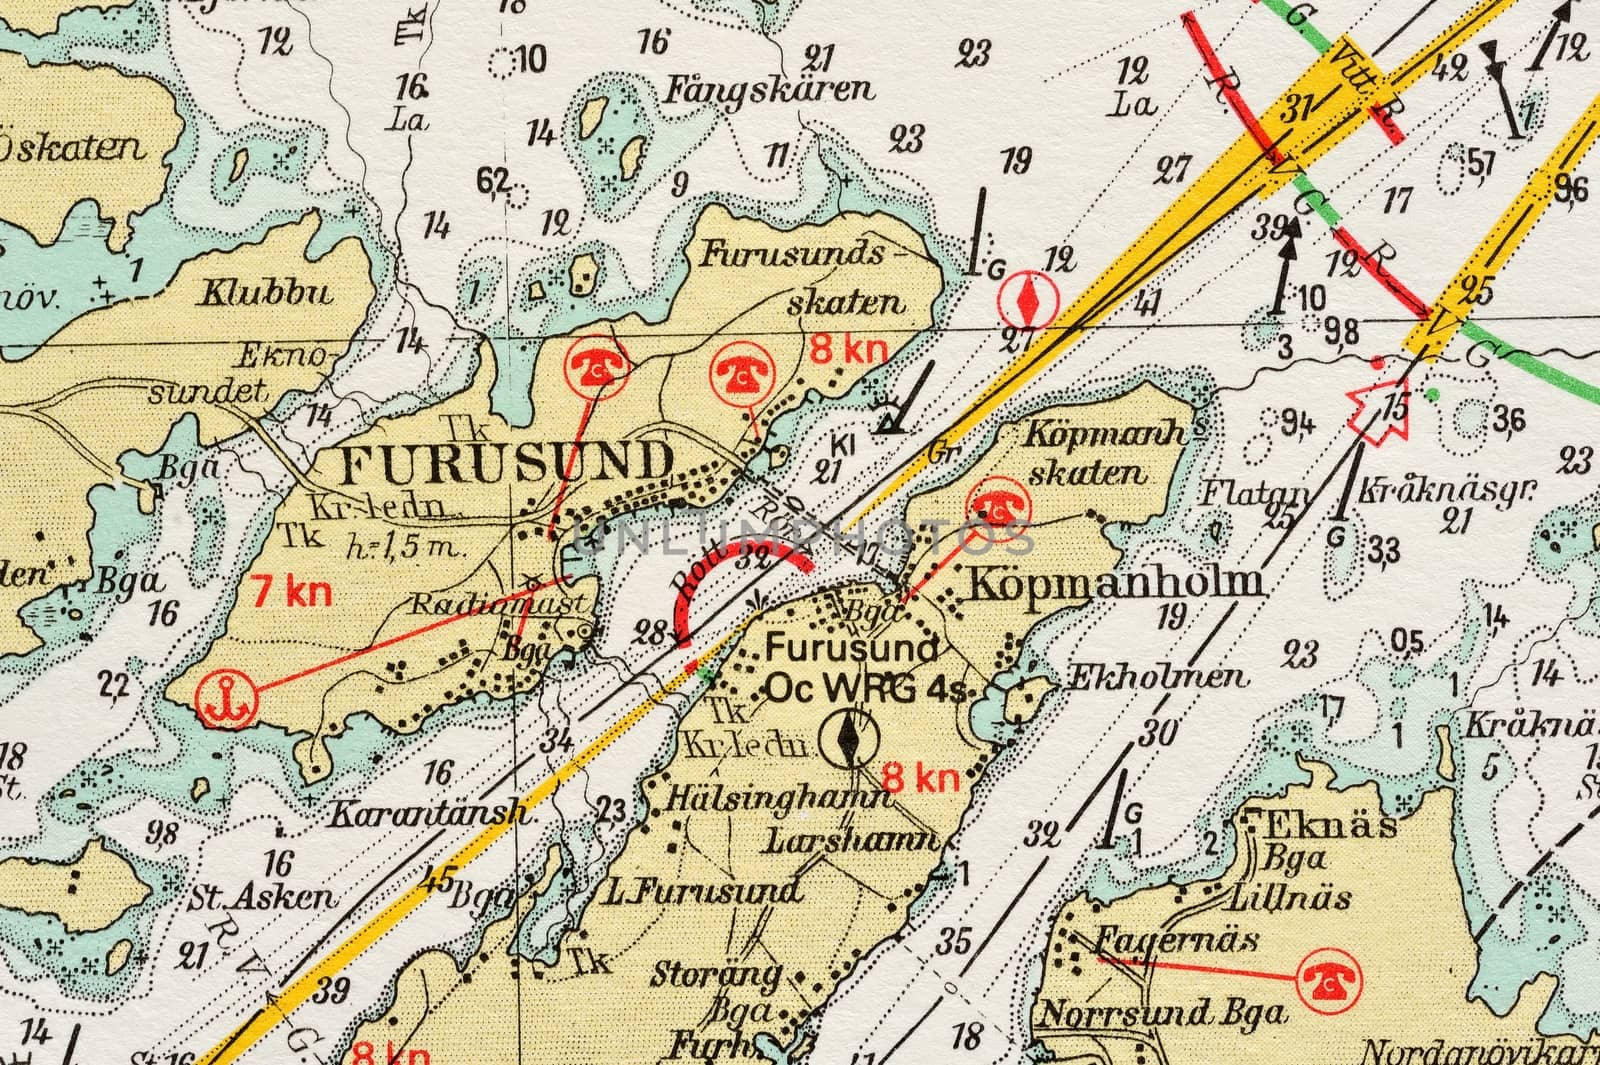 Macro shot of a old marine chart, detailing Stockholm archipelago. 

Picture is from "Batsjokort 1982-83 Serie A LANDSORT-ARHOLMA", created 2013-10-12.